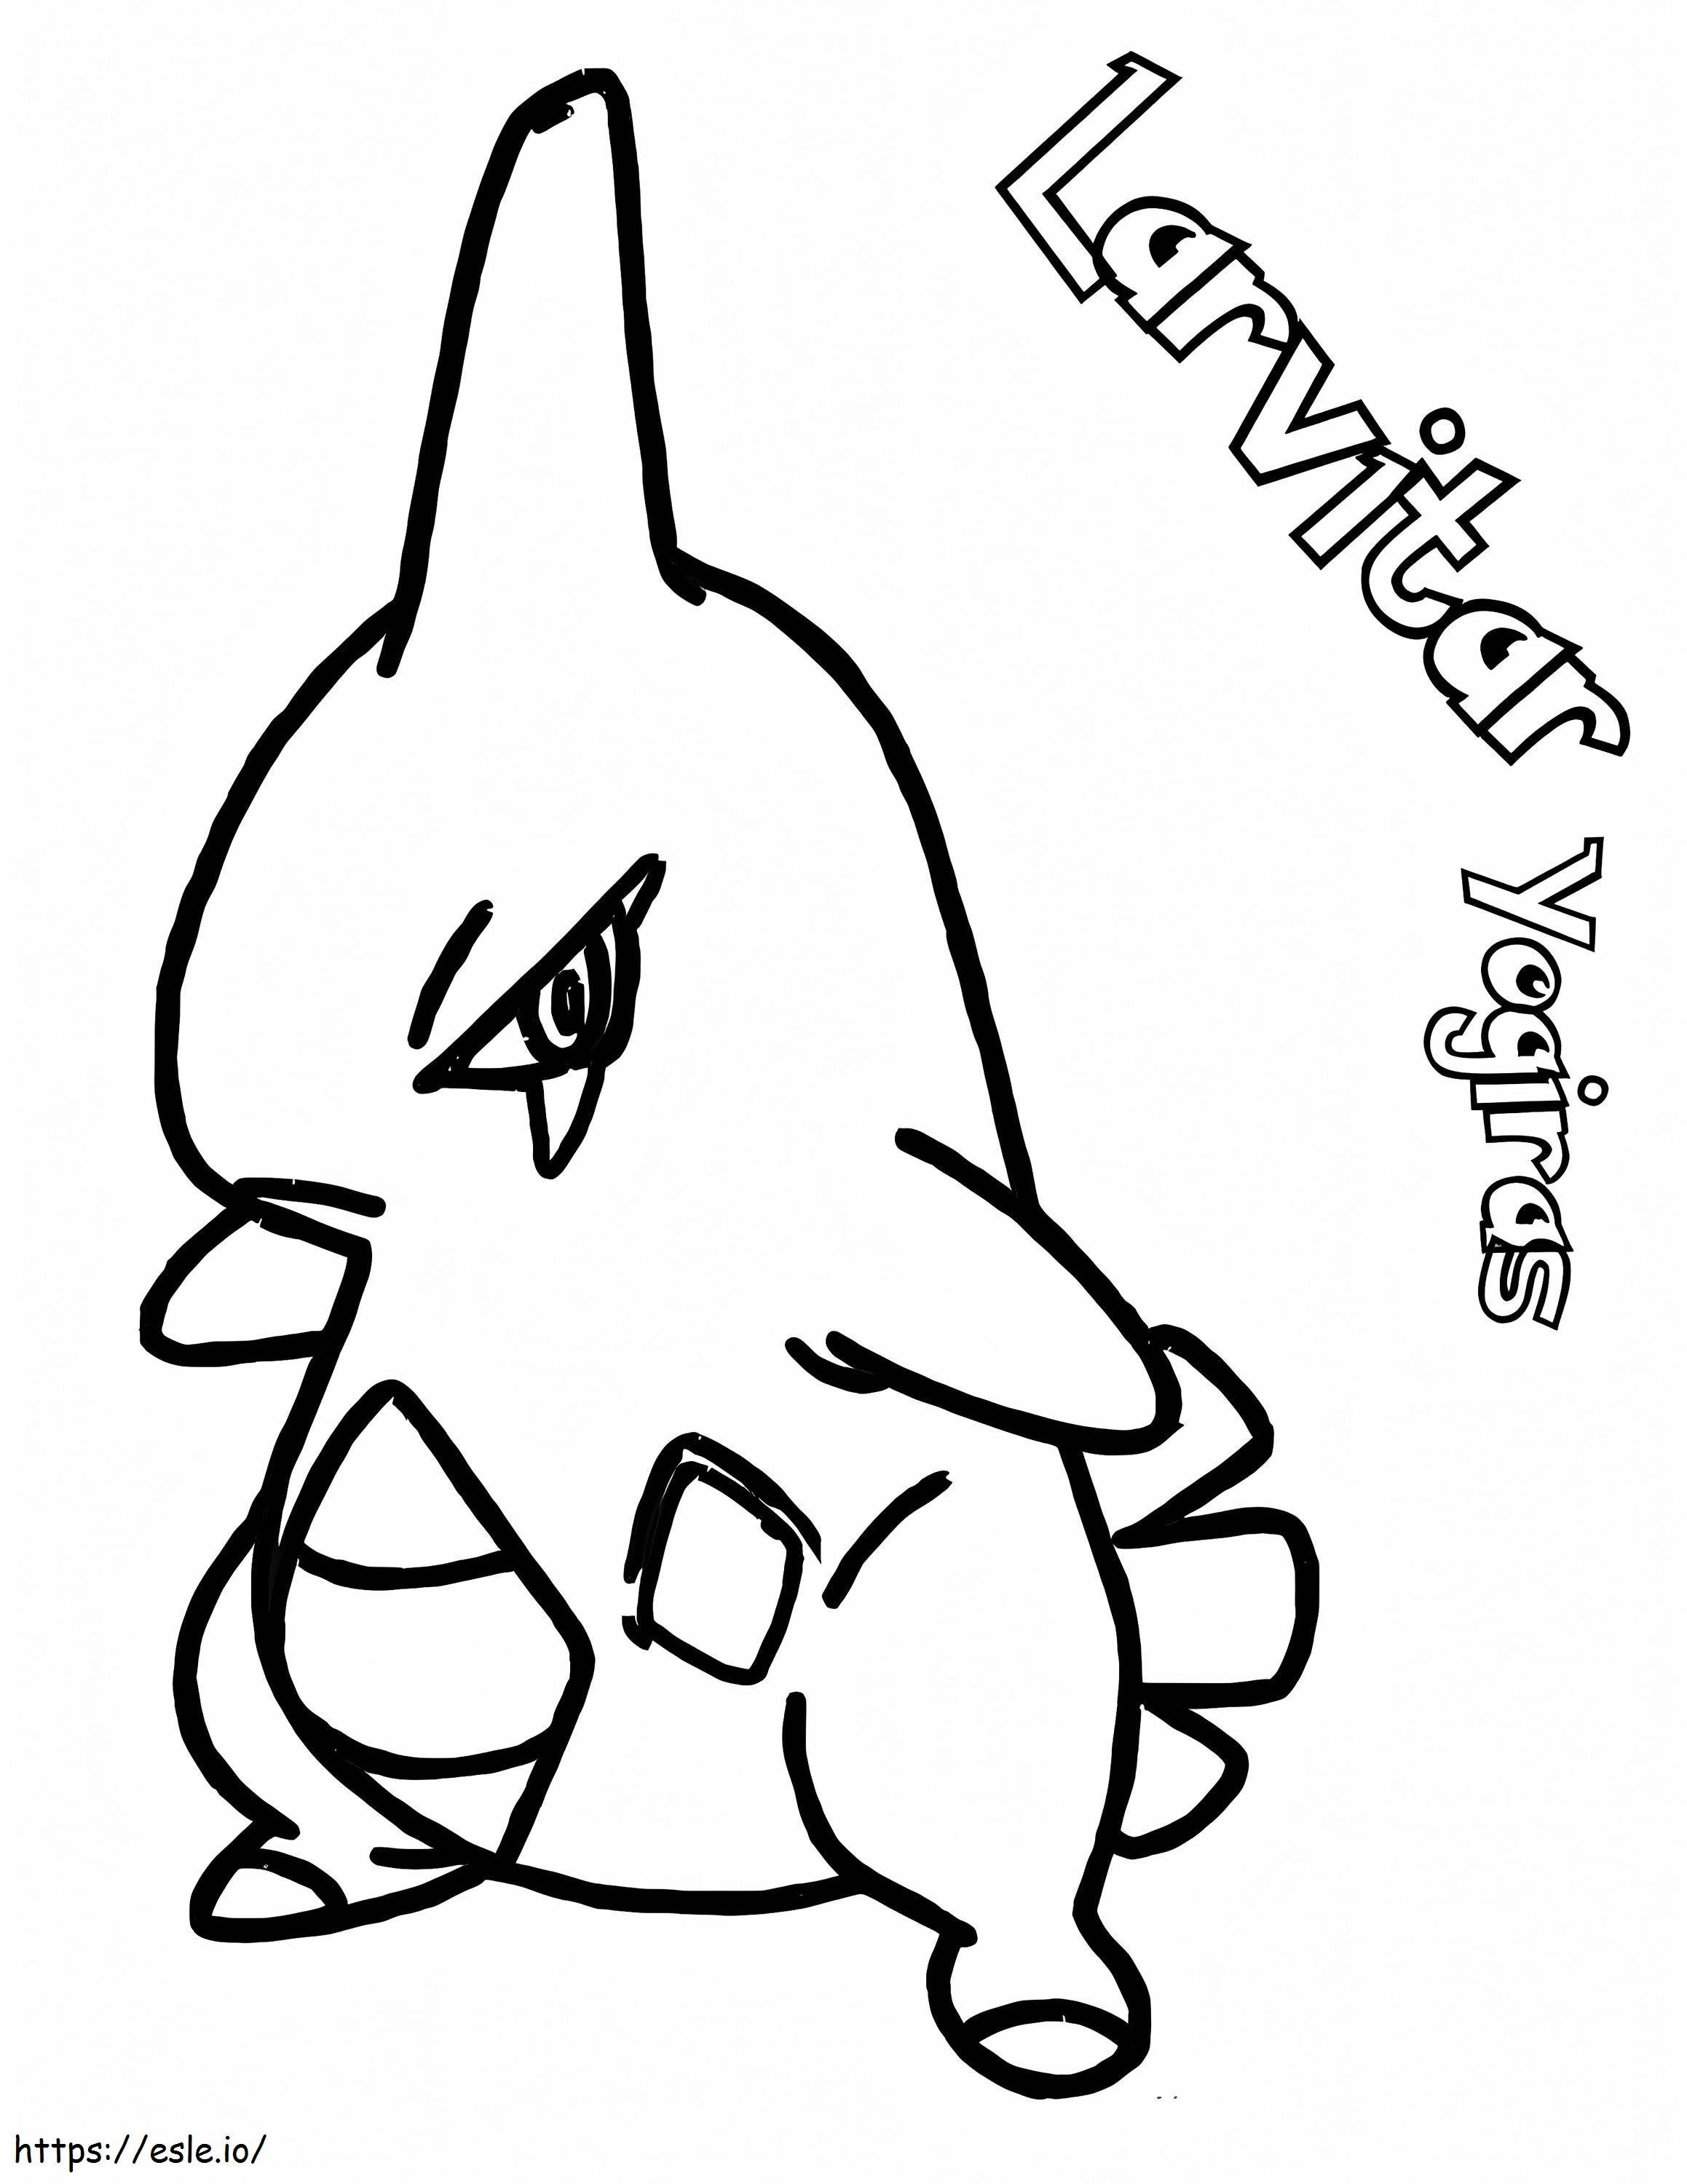 Printable Larvitar Pokemon coloring page